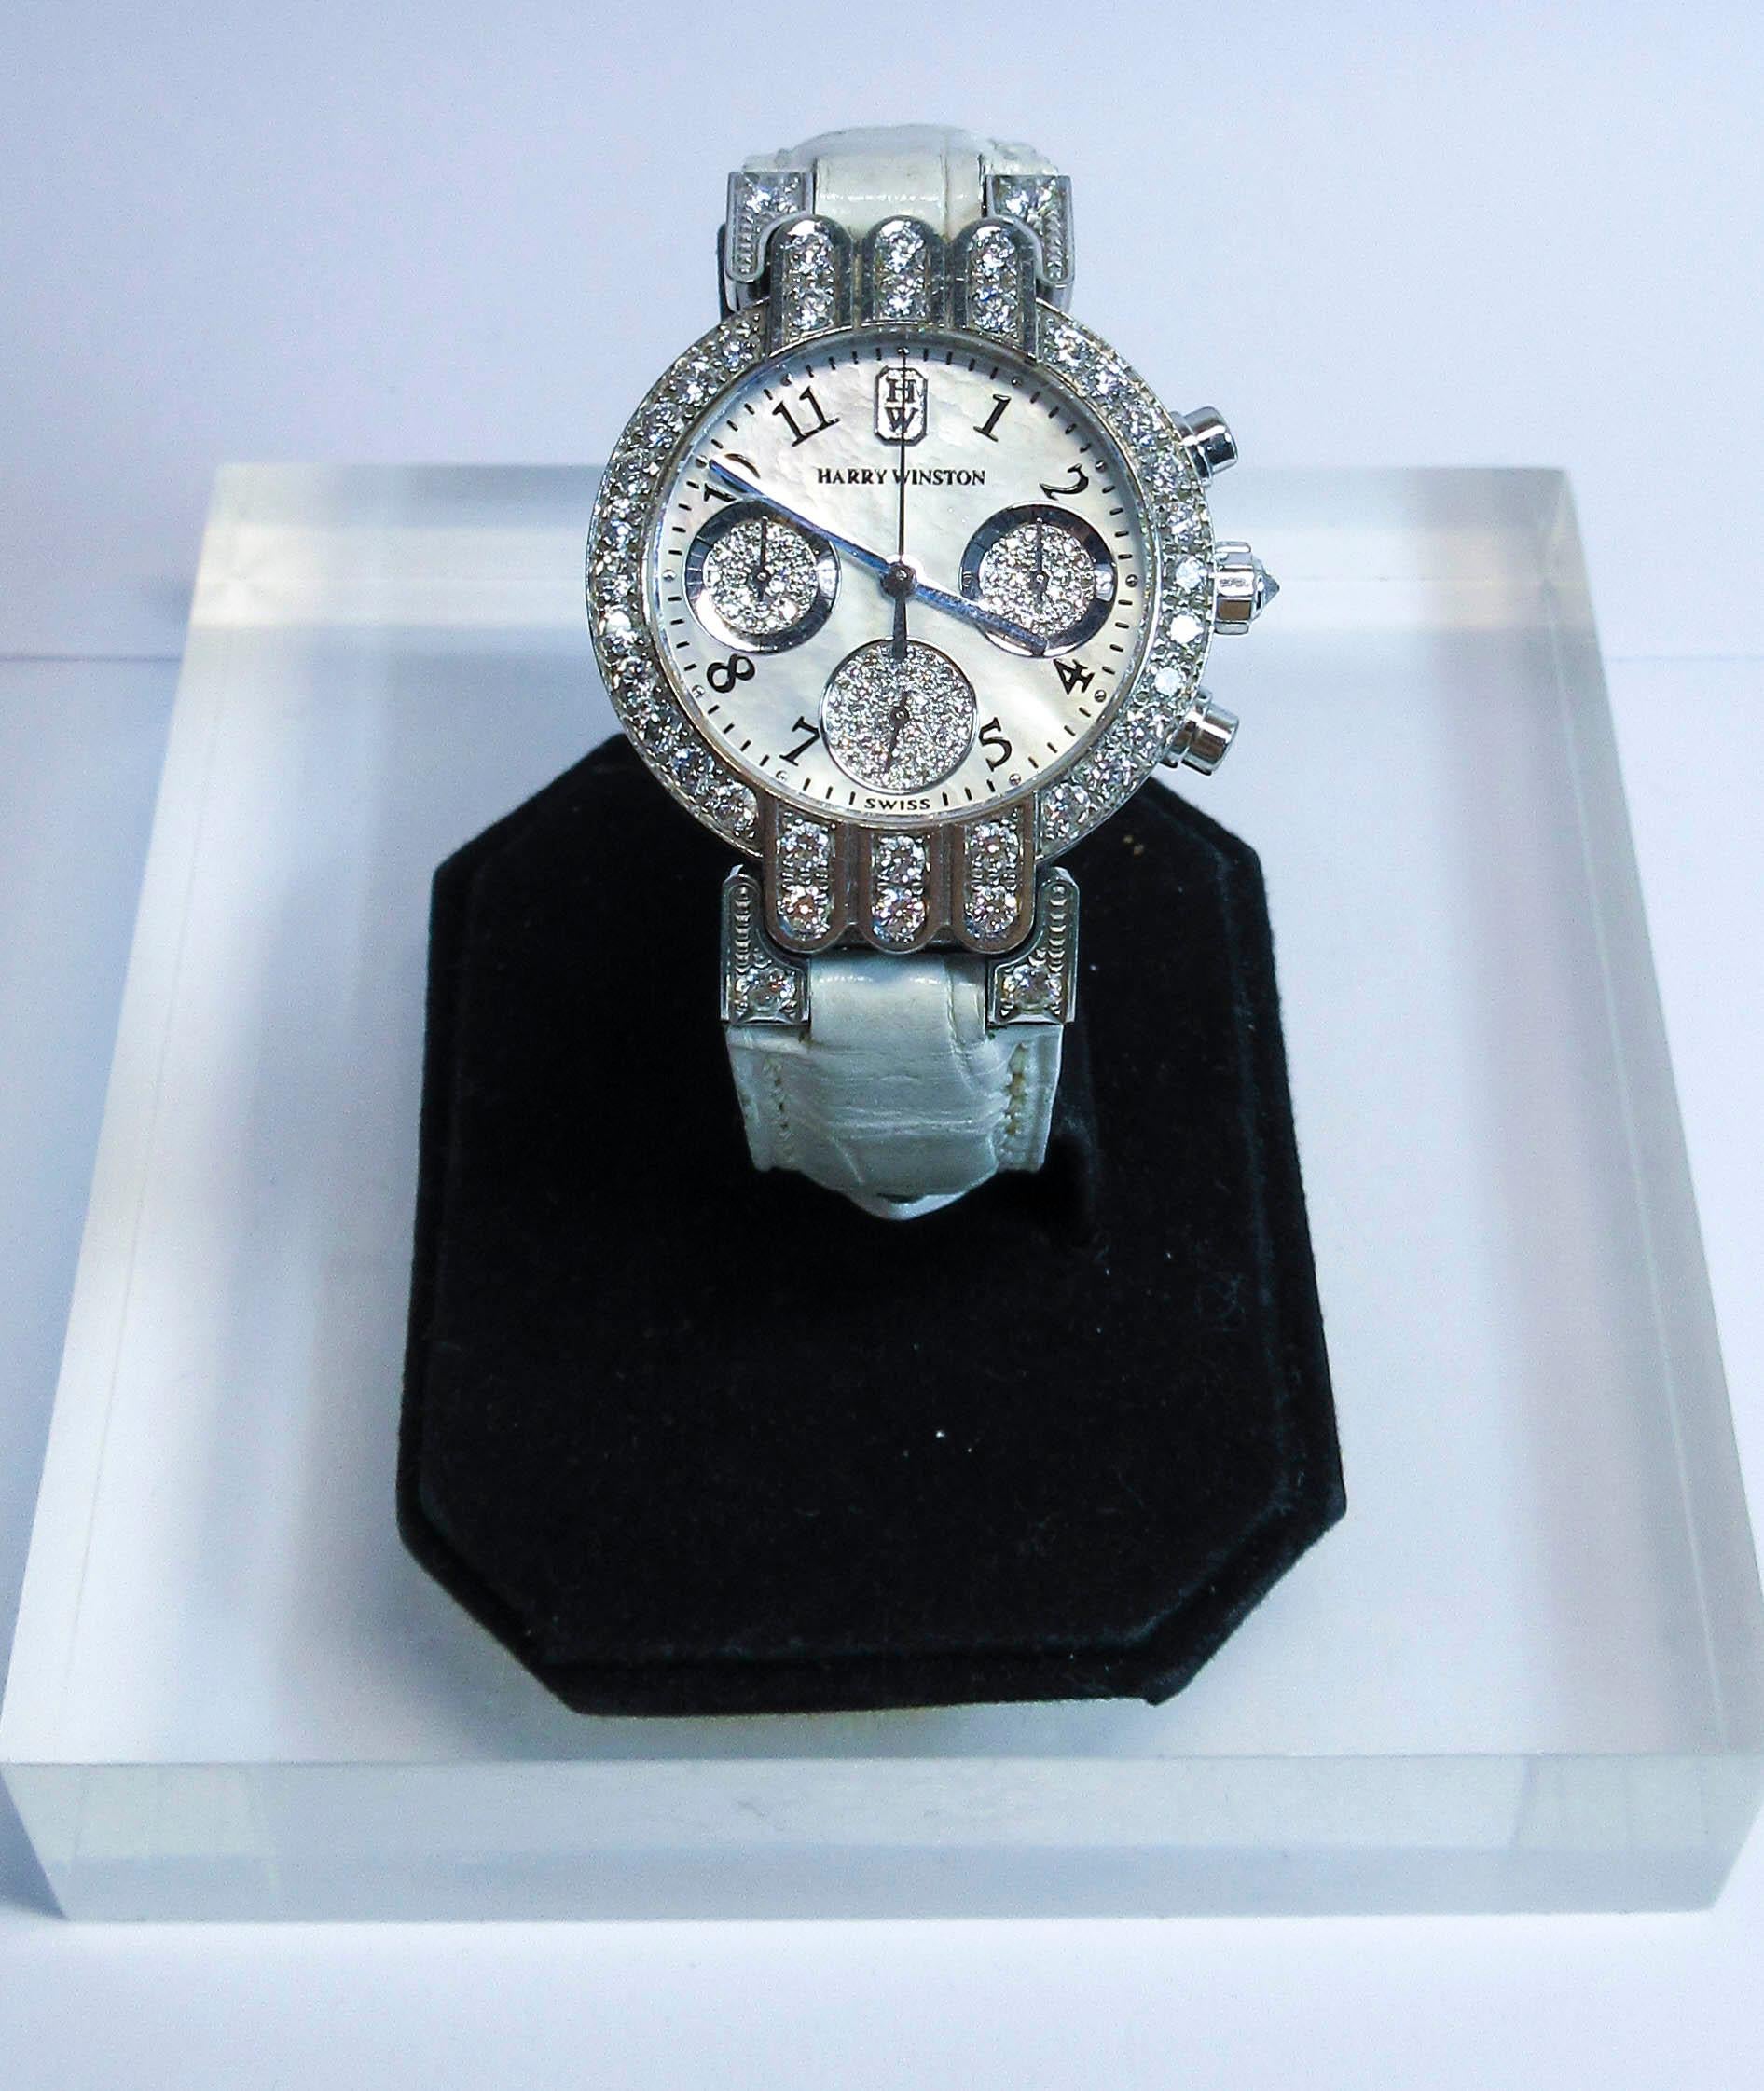 Harry Winston 18 Karat White Gold and Pavé Diamond Watch, Exotic Alligator Band 5